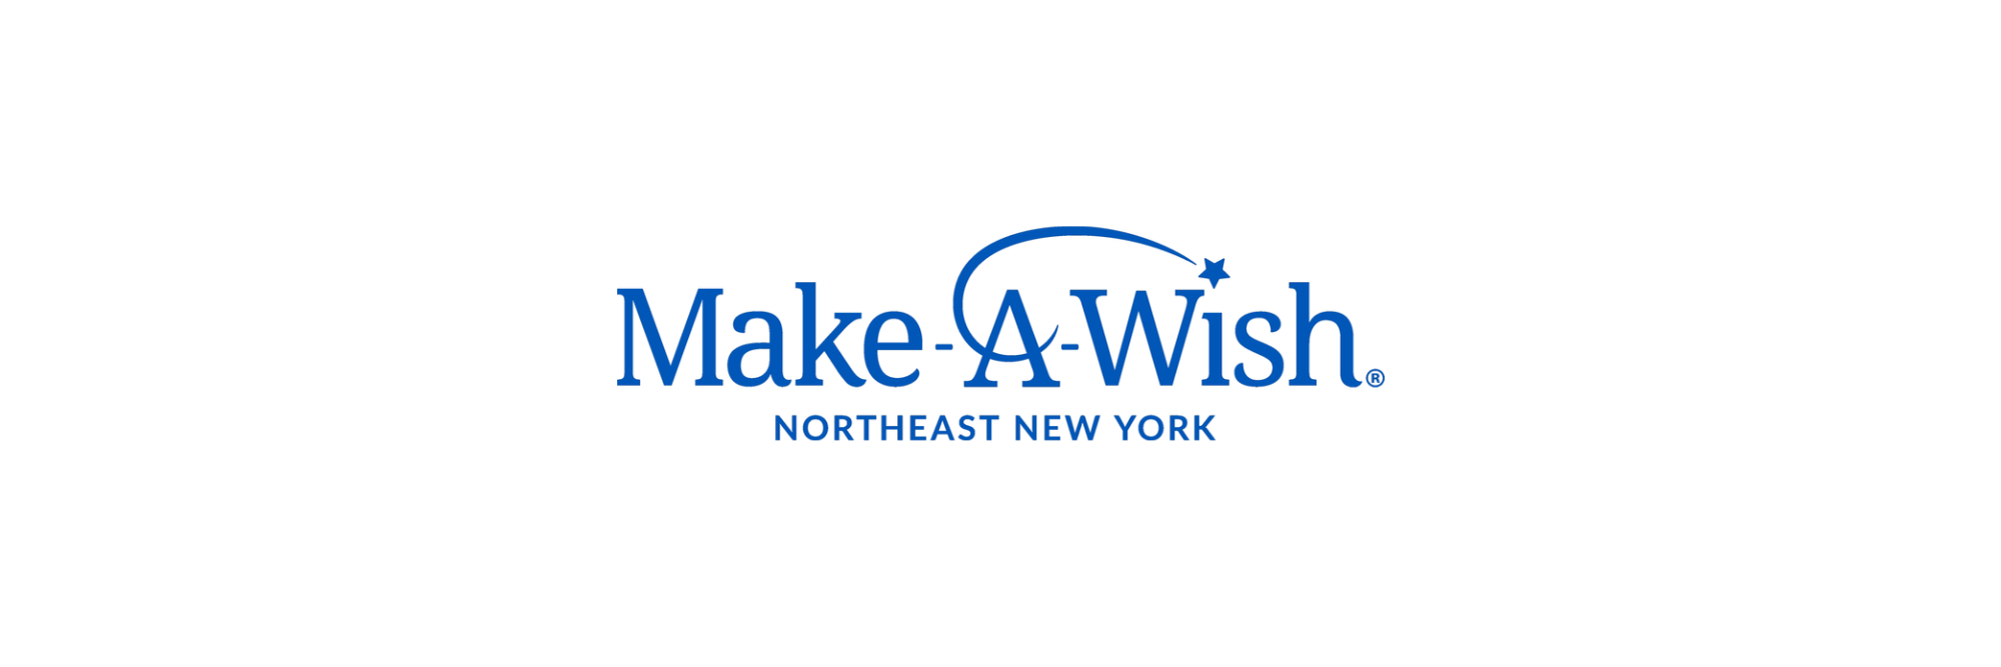 Make A Wish Northeastern New York Logo